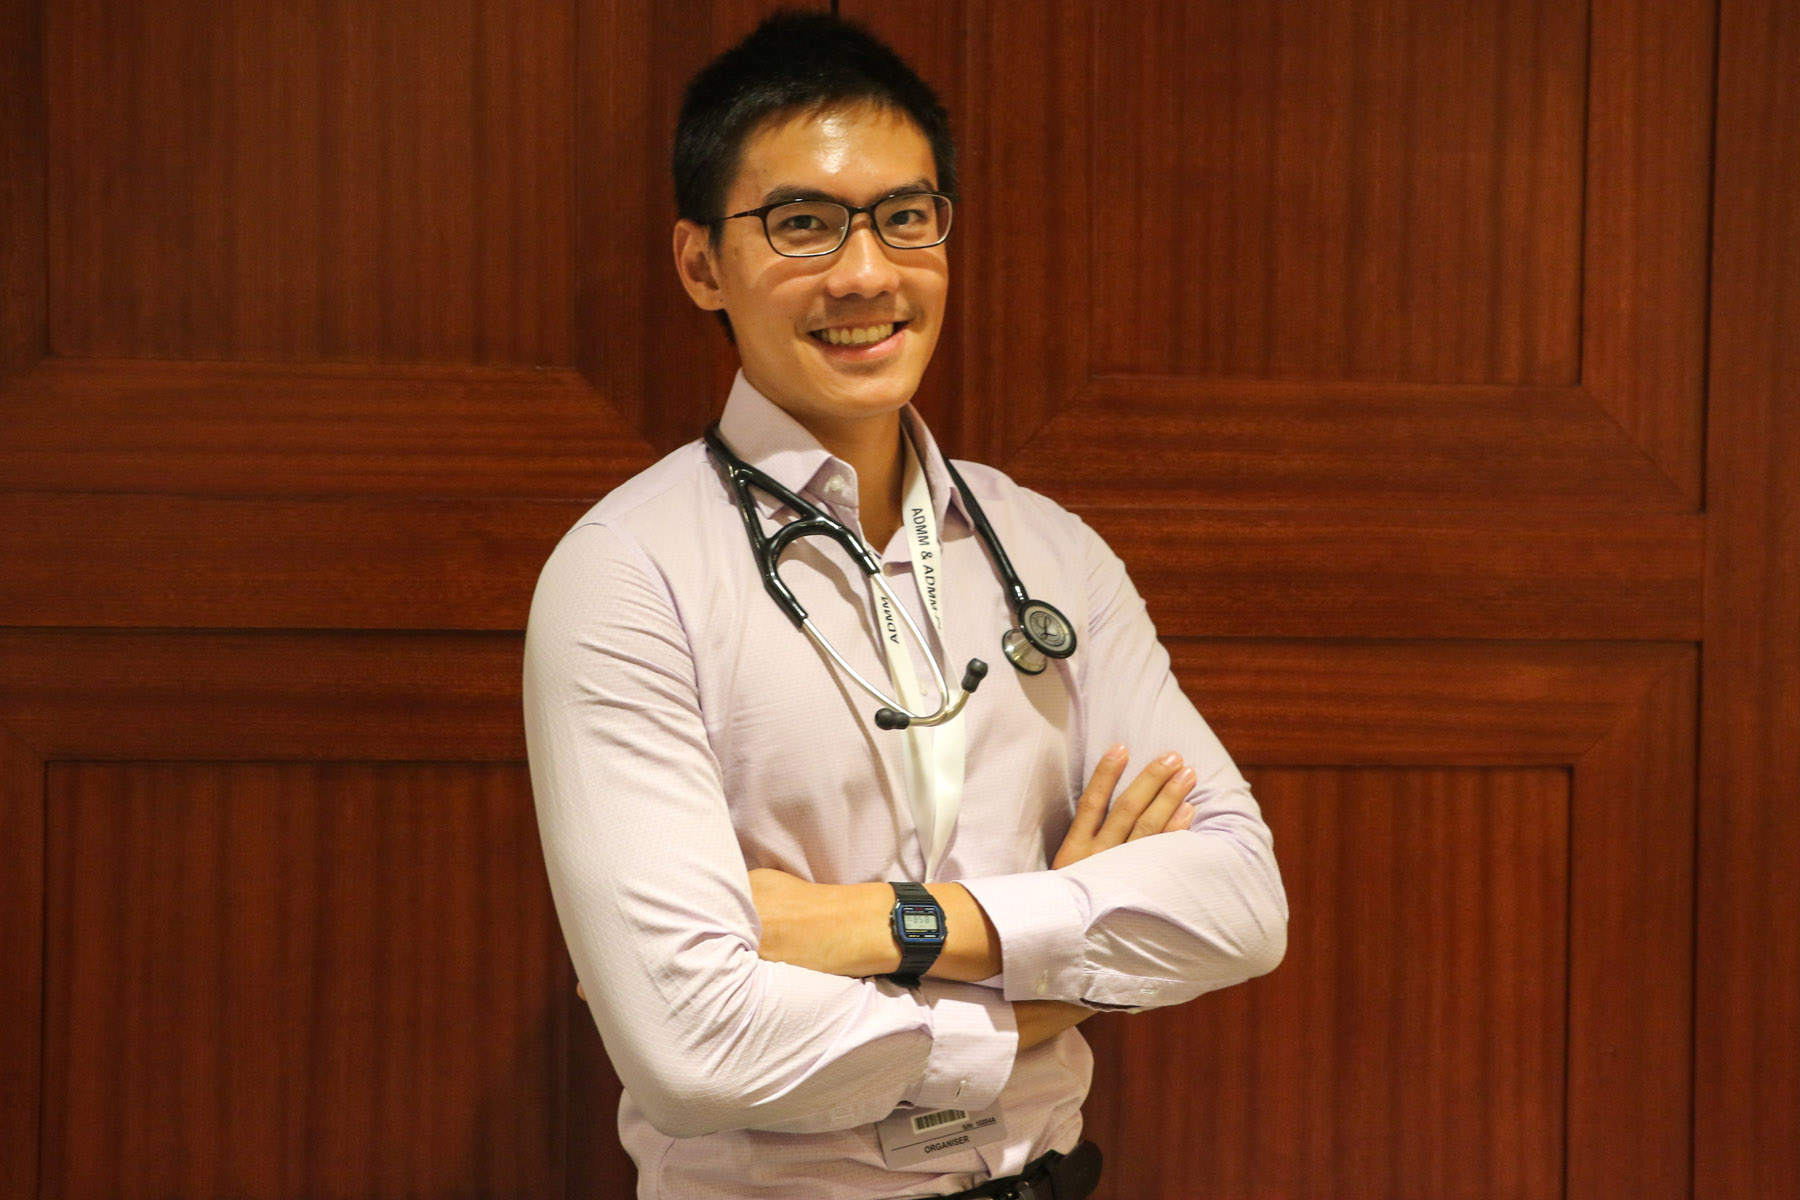 CPT (DR) Kegan Lim, AMS